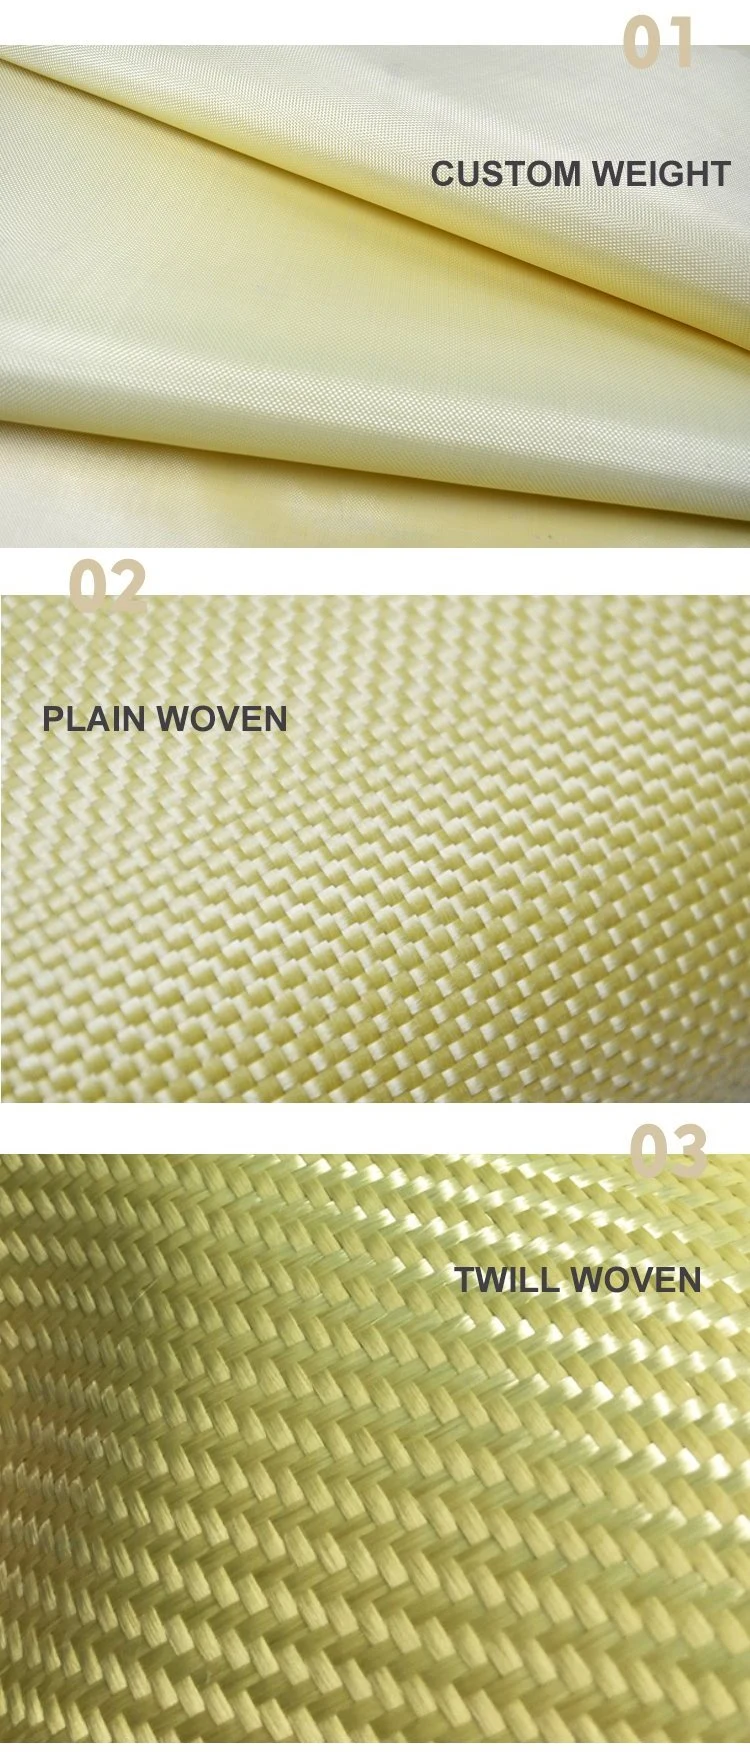 China Factory Fire Retardant Kevlar 1000d 180GSM Plain Twill Carbon Fiber Cloth Aramid DuPont Kevlar Cloth Fabric Aramid Fabric Kevlar Fabric for Armor